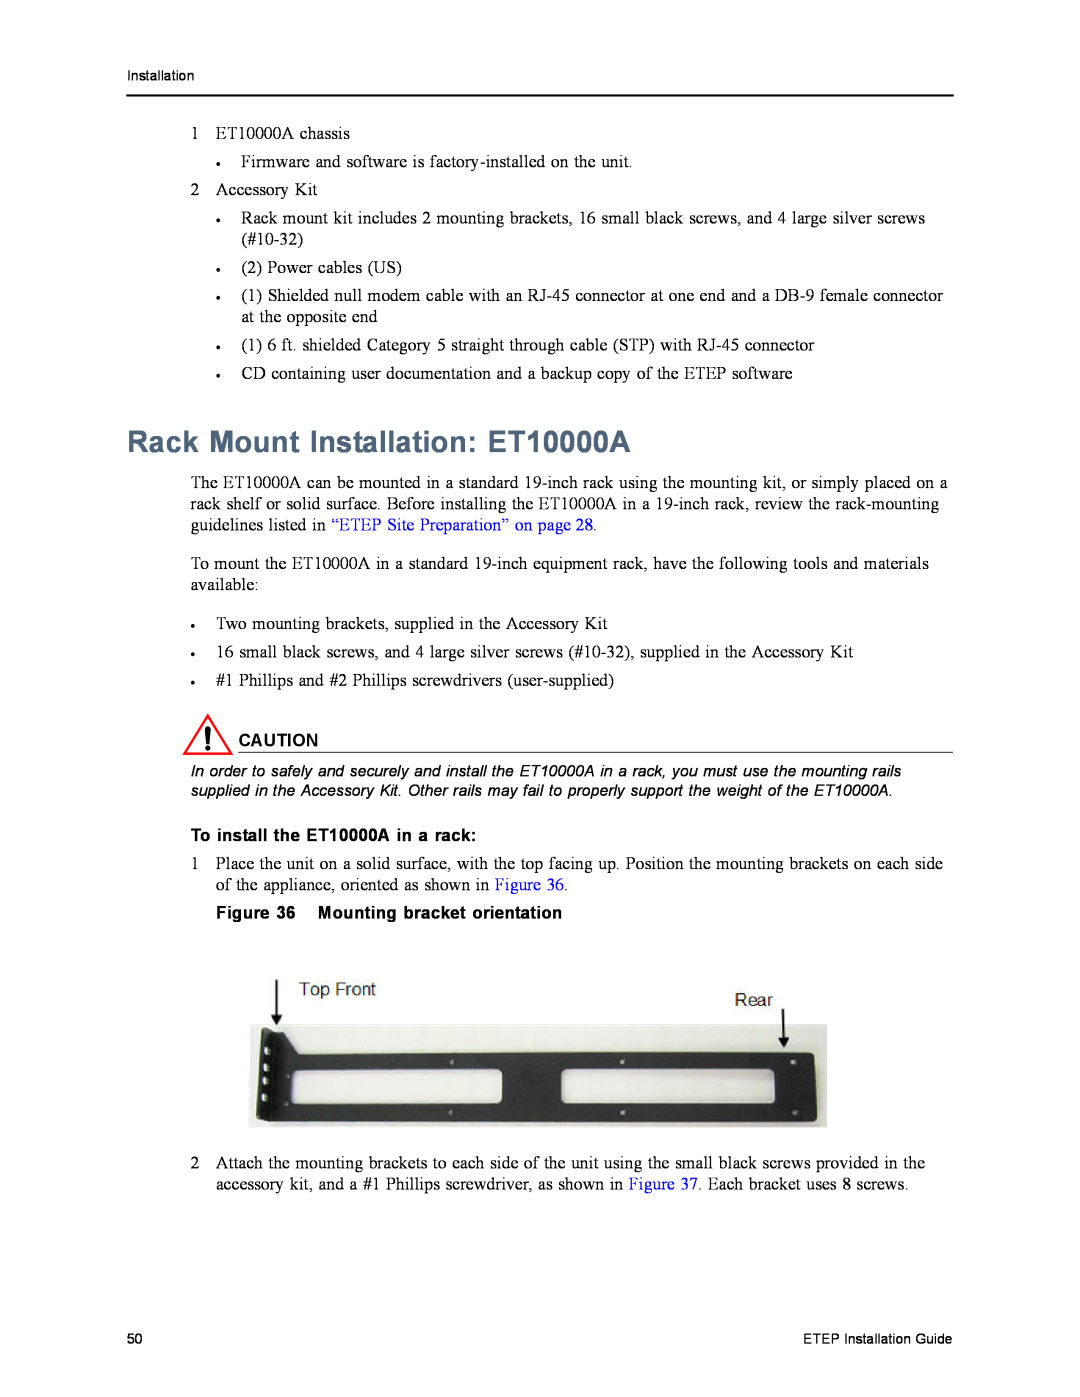 Black Box ET1000A manual Rack Mount Installation ET10000A, To install the ET10000A in a rack, Mounting bracket orientation 